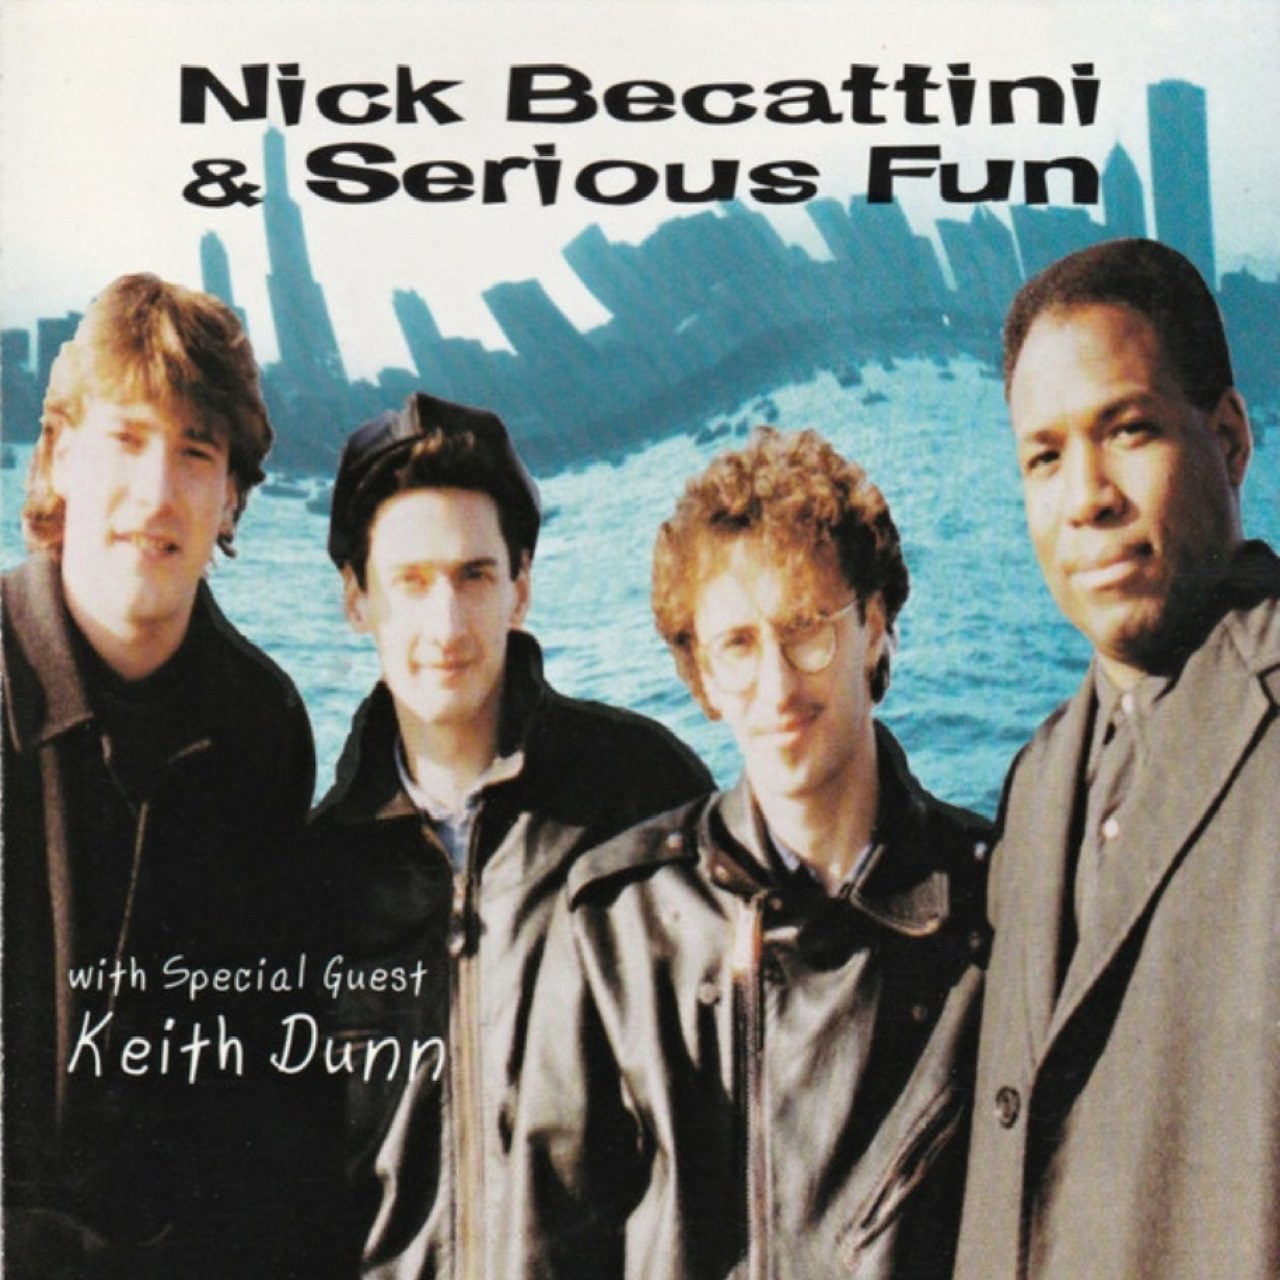 Nick Becattini & Serious Fun - Nick Becattini & Serious Fun cover album